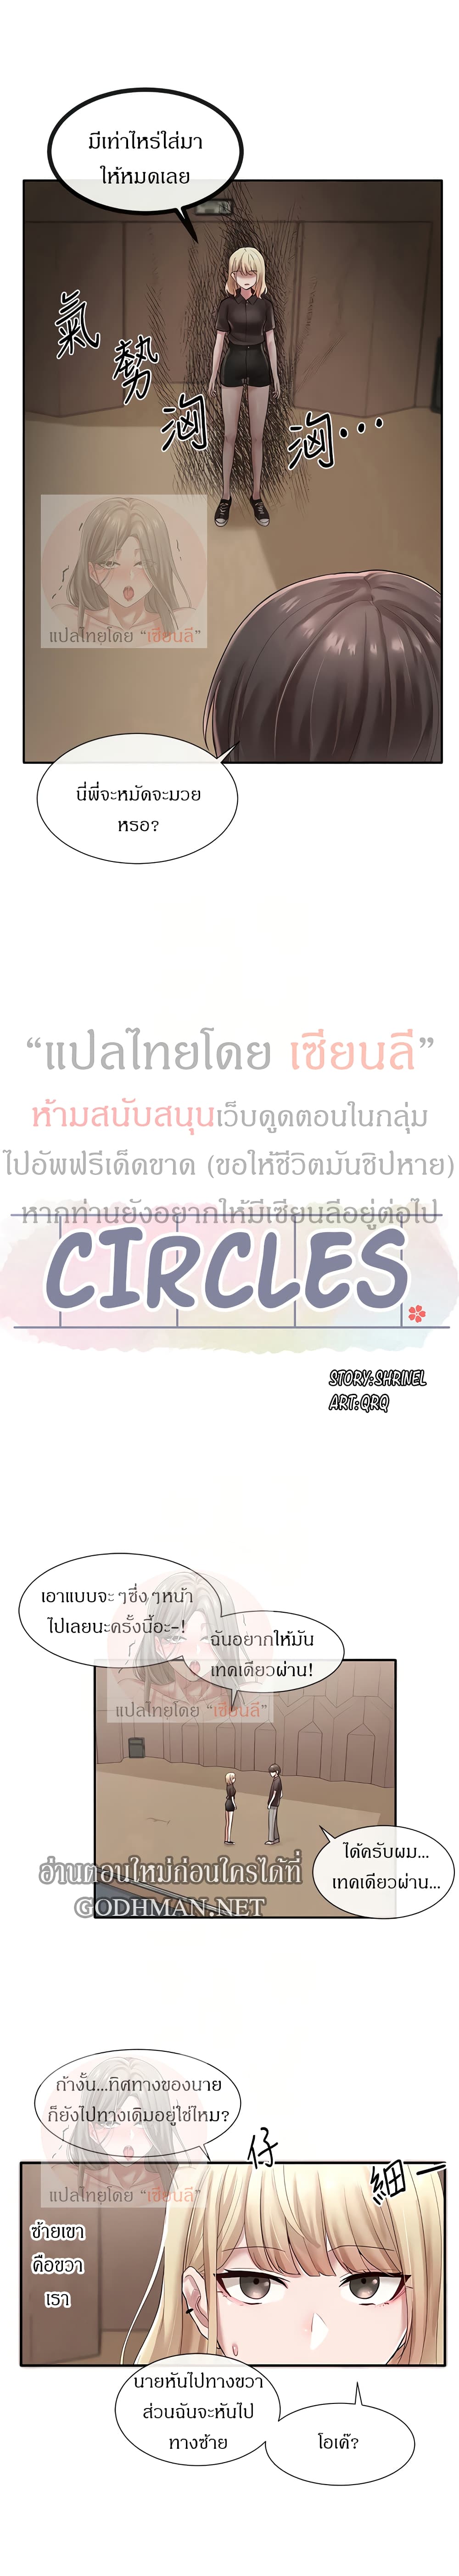 Theater-Society-Circles-44_12.jpg